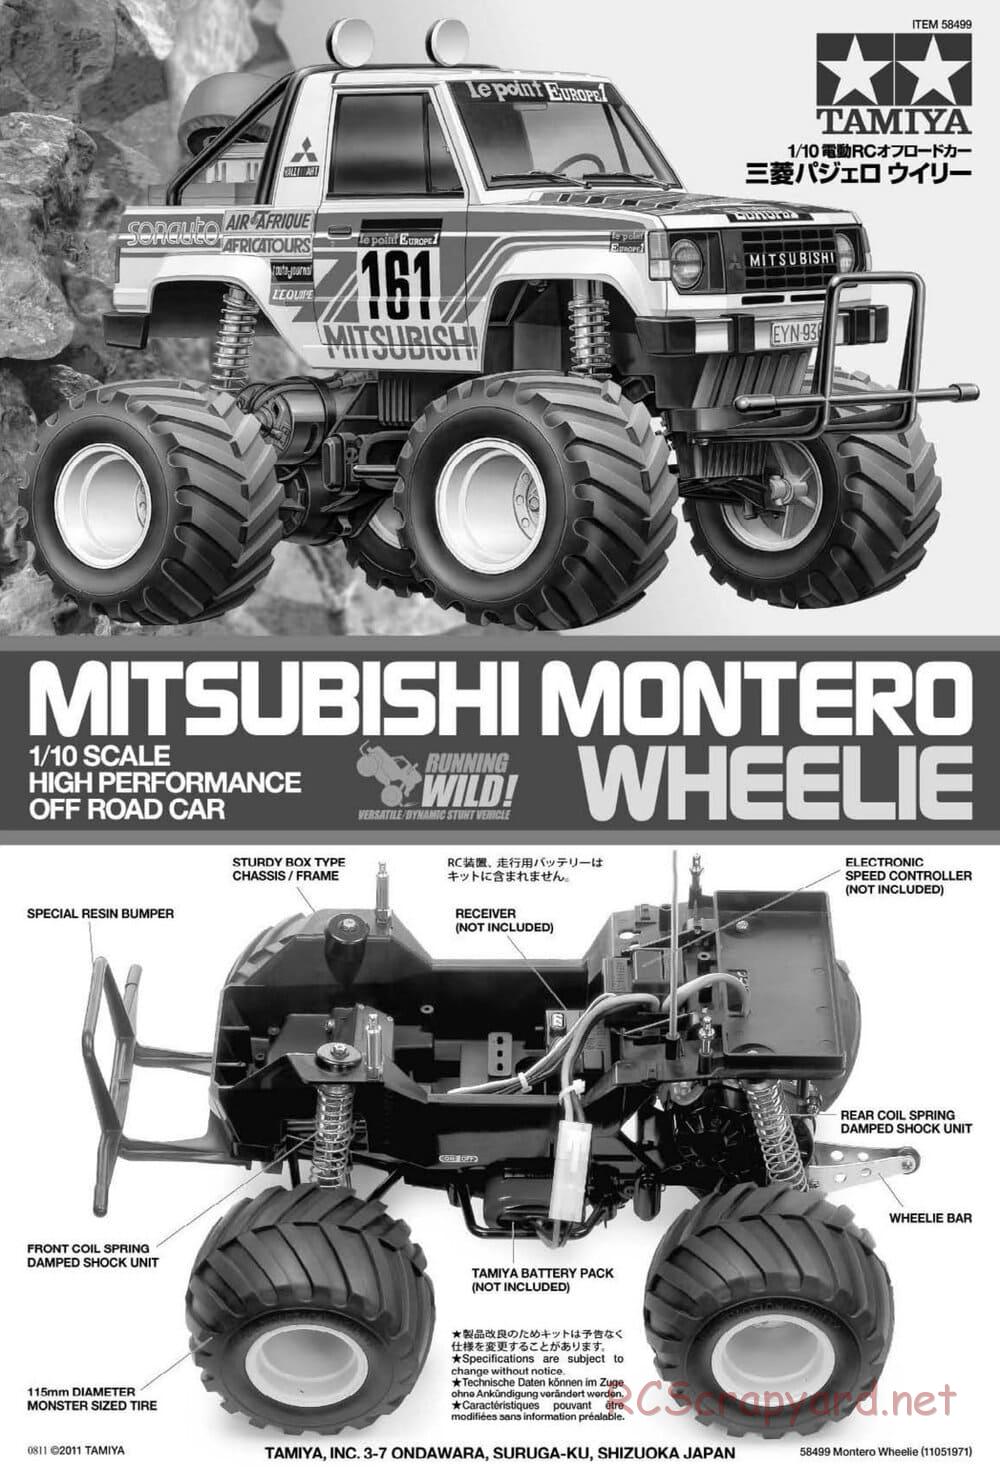 Tamiya - Mitsubishi Montero Wheelie - CW-01 Chassis - Manual - Page 1